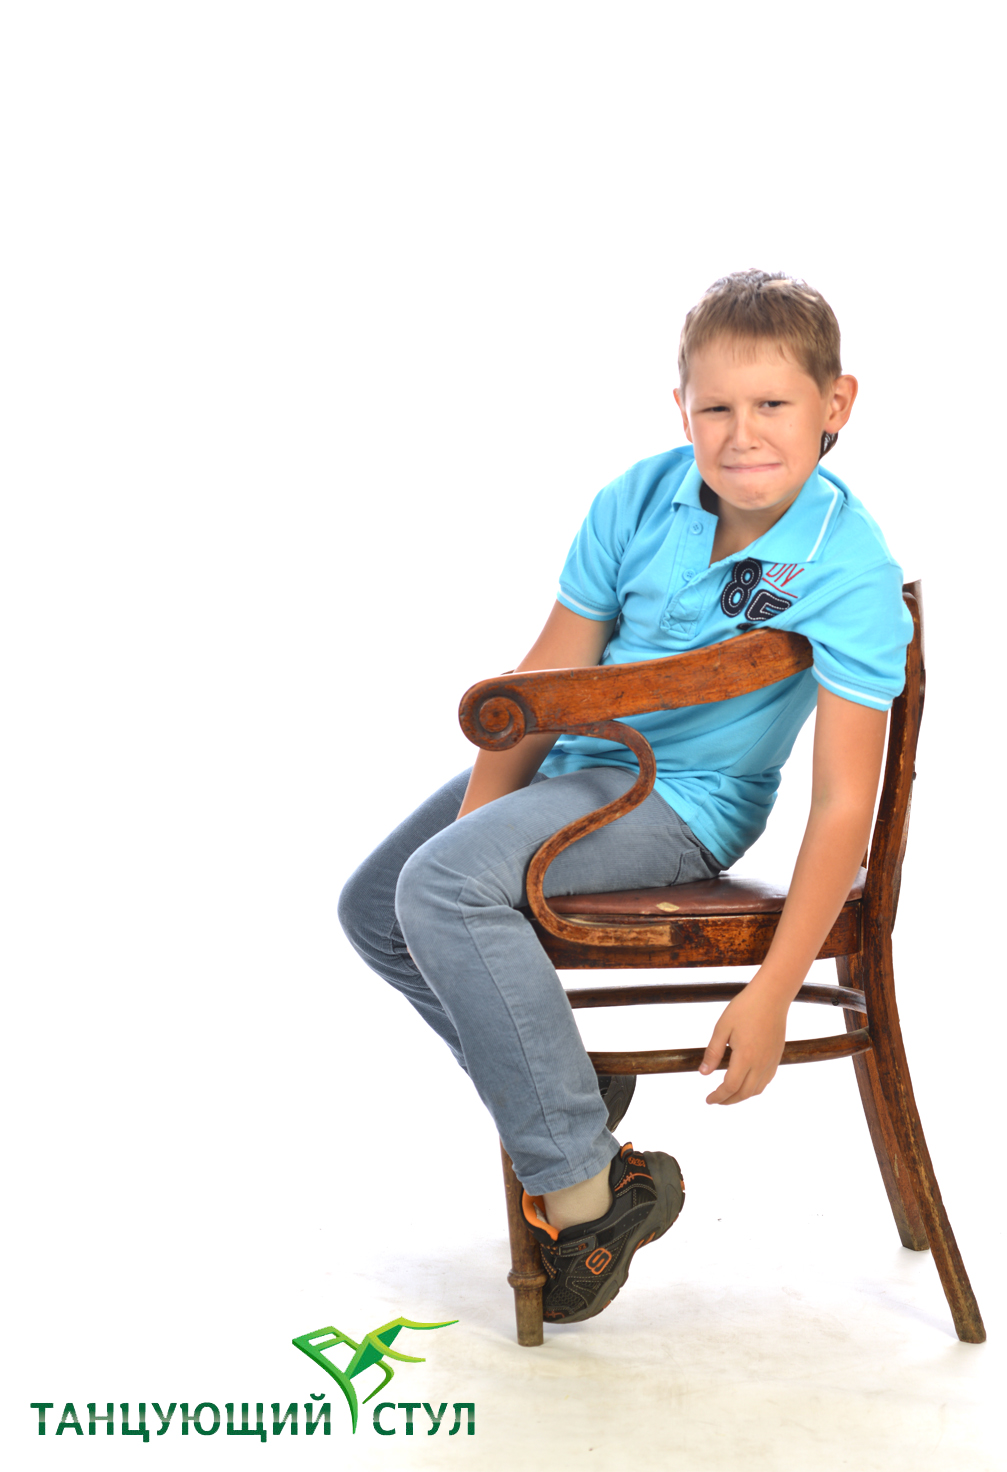 Ребенок с леденцом на стуле